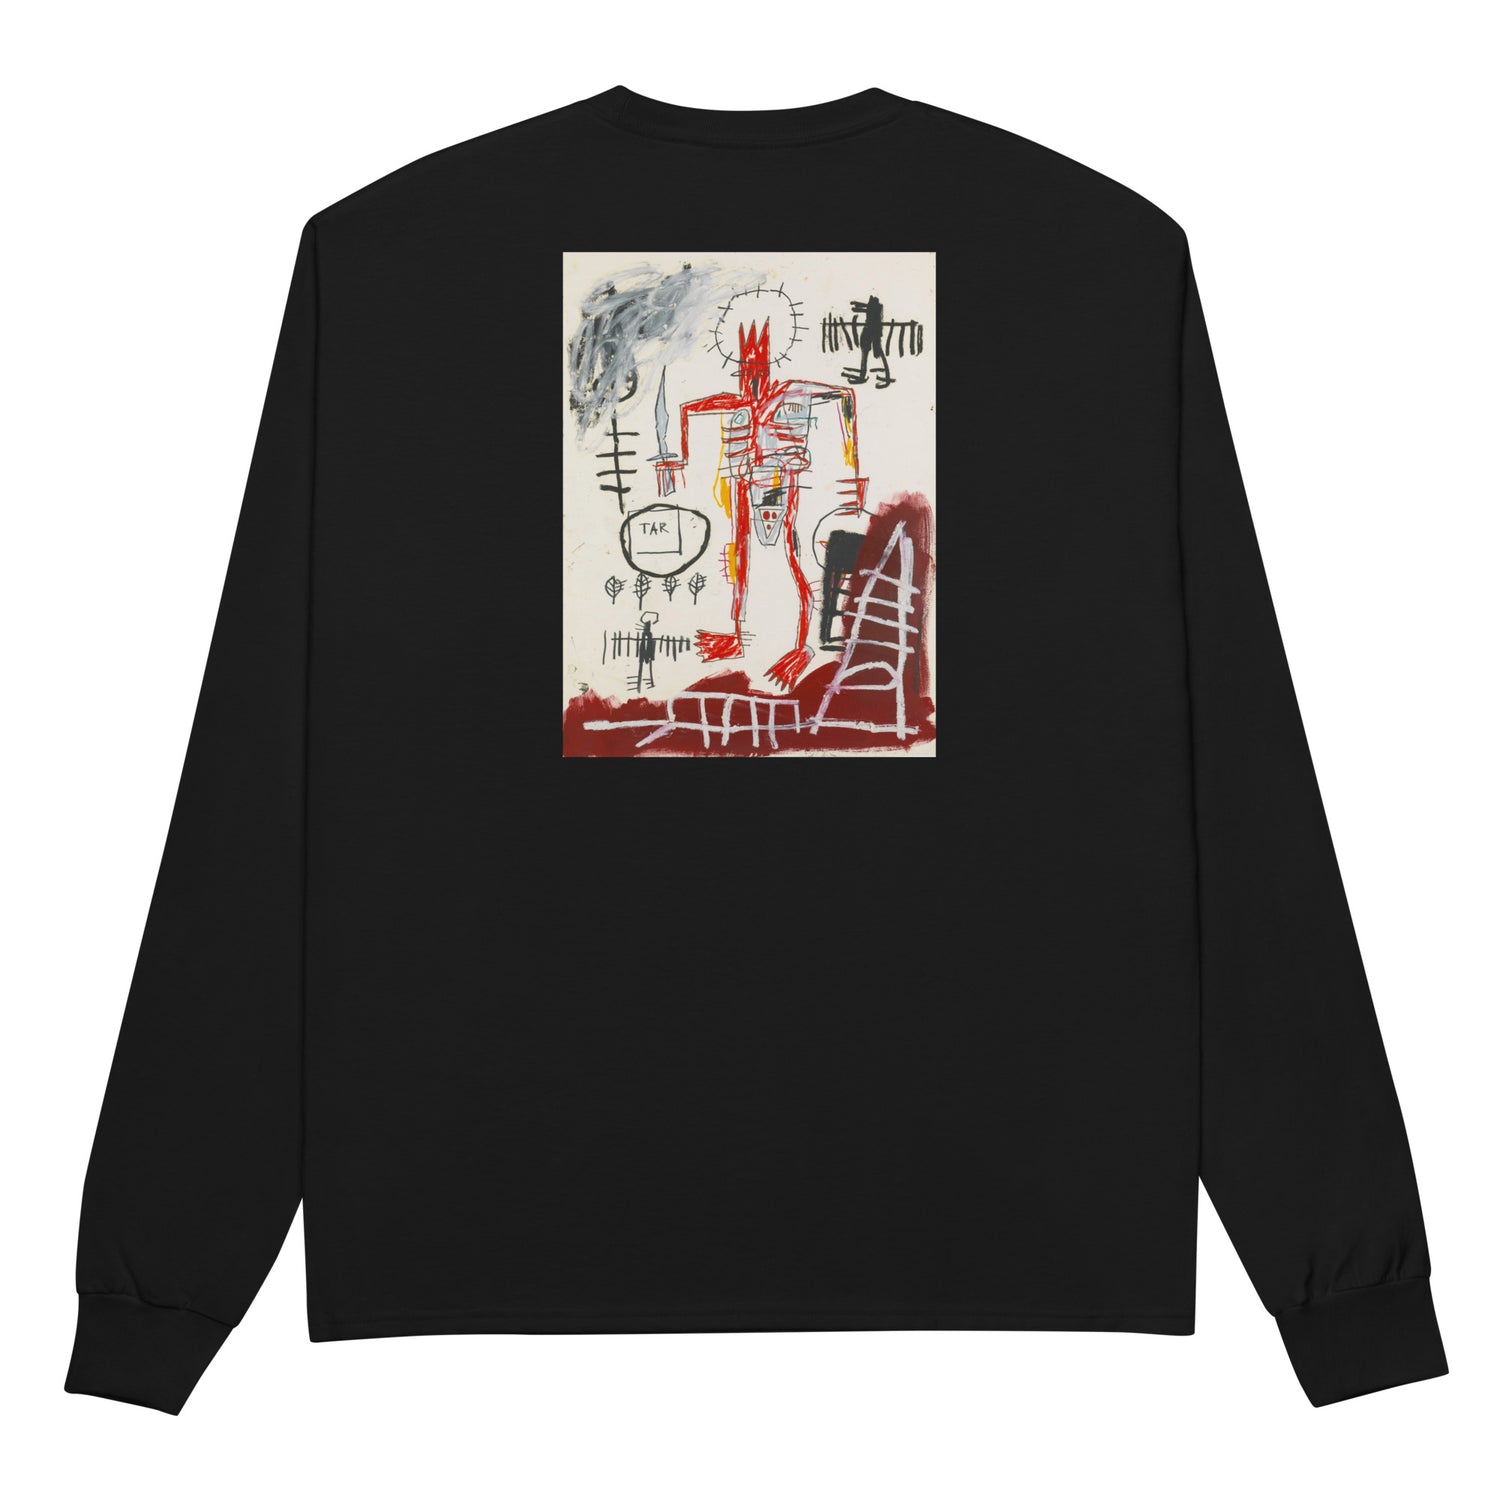 Jean-Michel Basquiat "Untitled" Artwork Embroidered + Printed Premium Champion Streetwear Long Sleeve Shirt Black